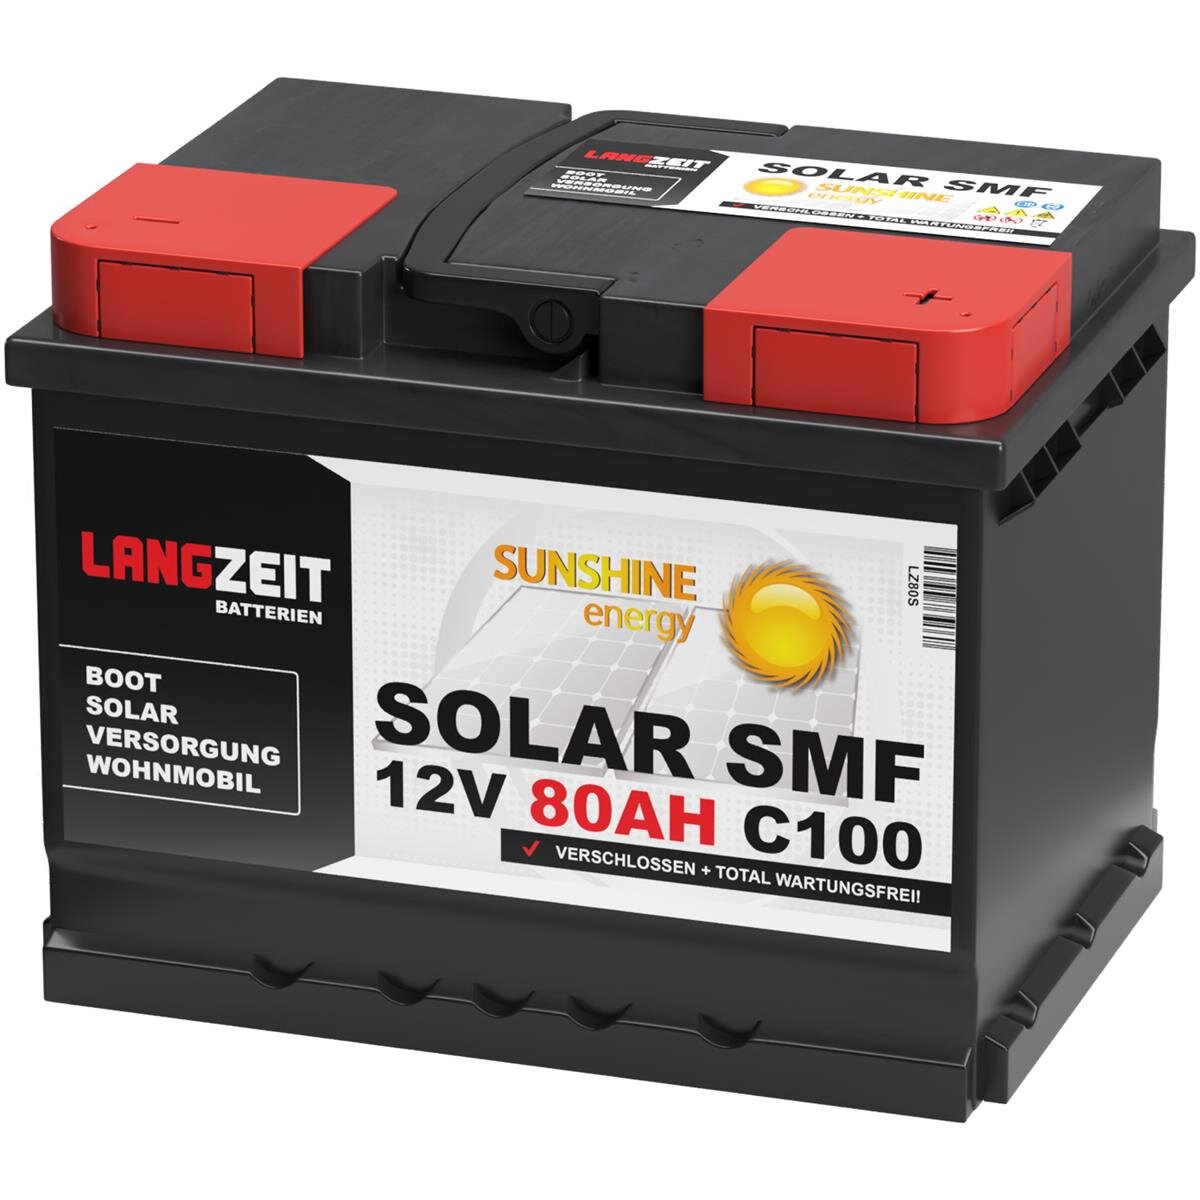 https://www.langzeitbatterien.de/media/image/product/7845/lg/langzeit-solarbatterie-smf-80ah-12v.jpg